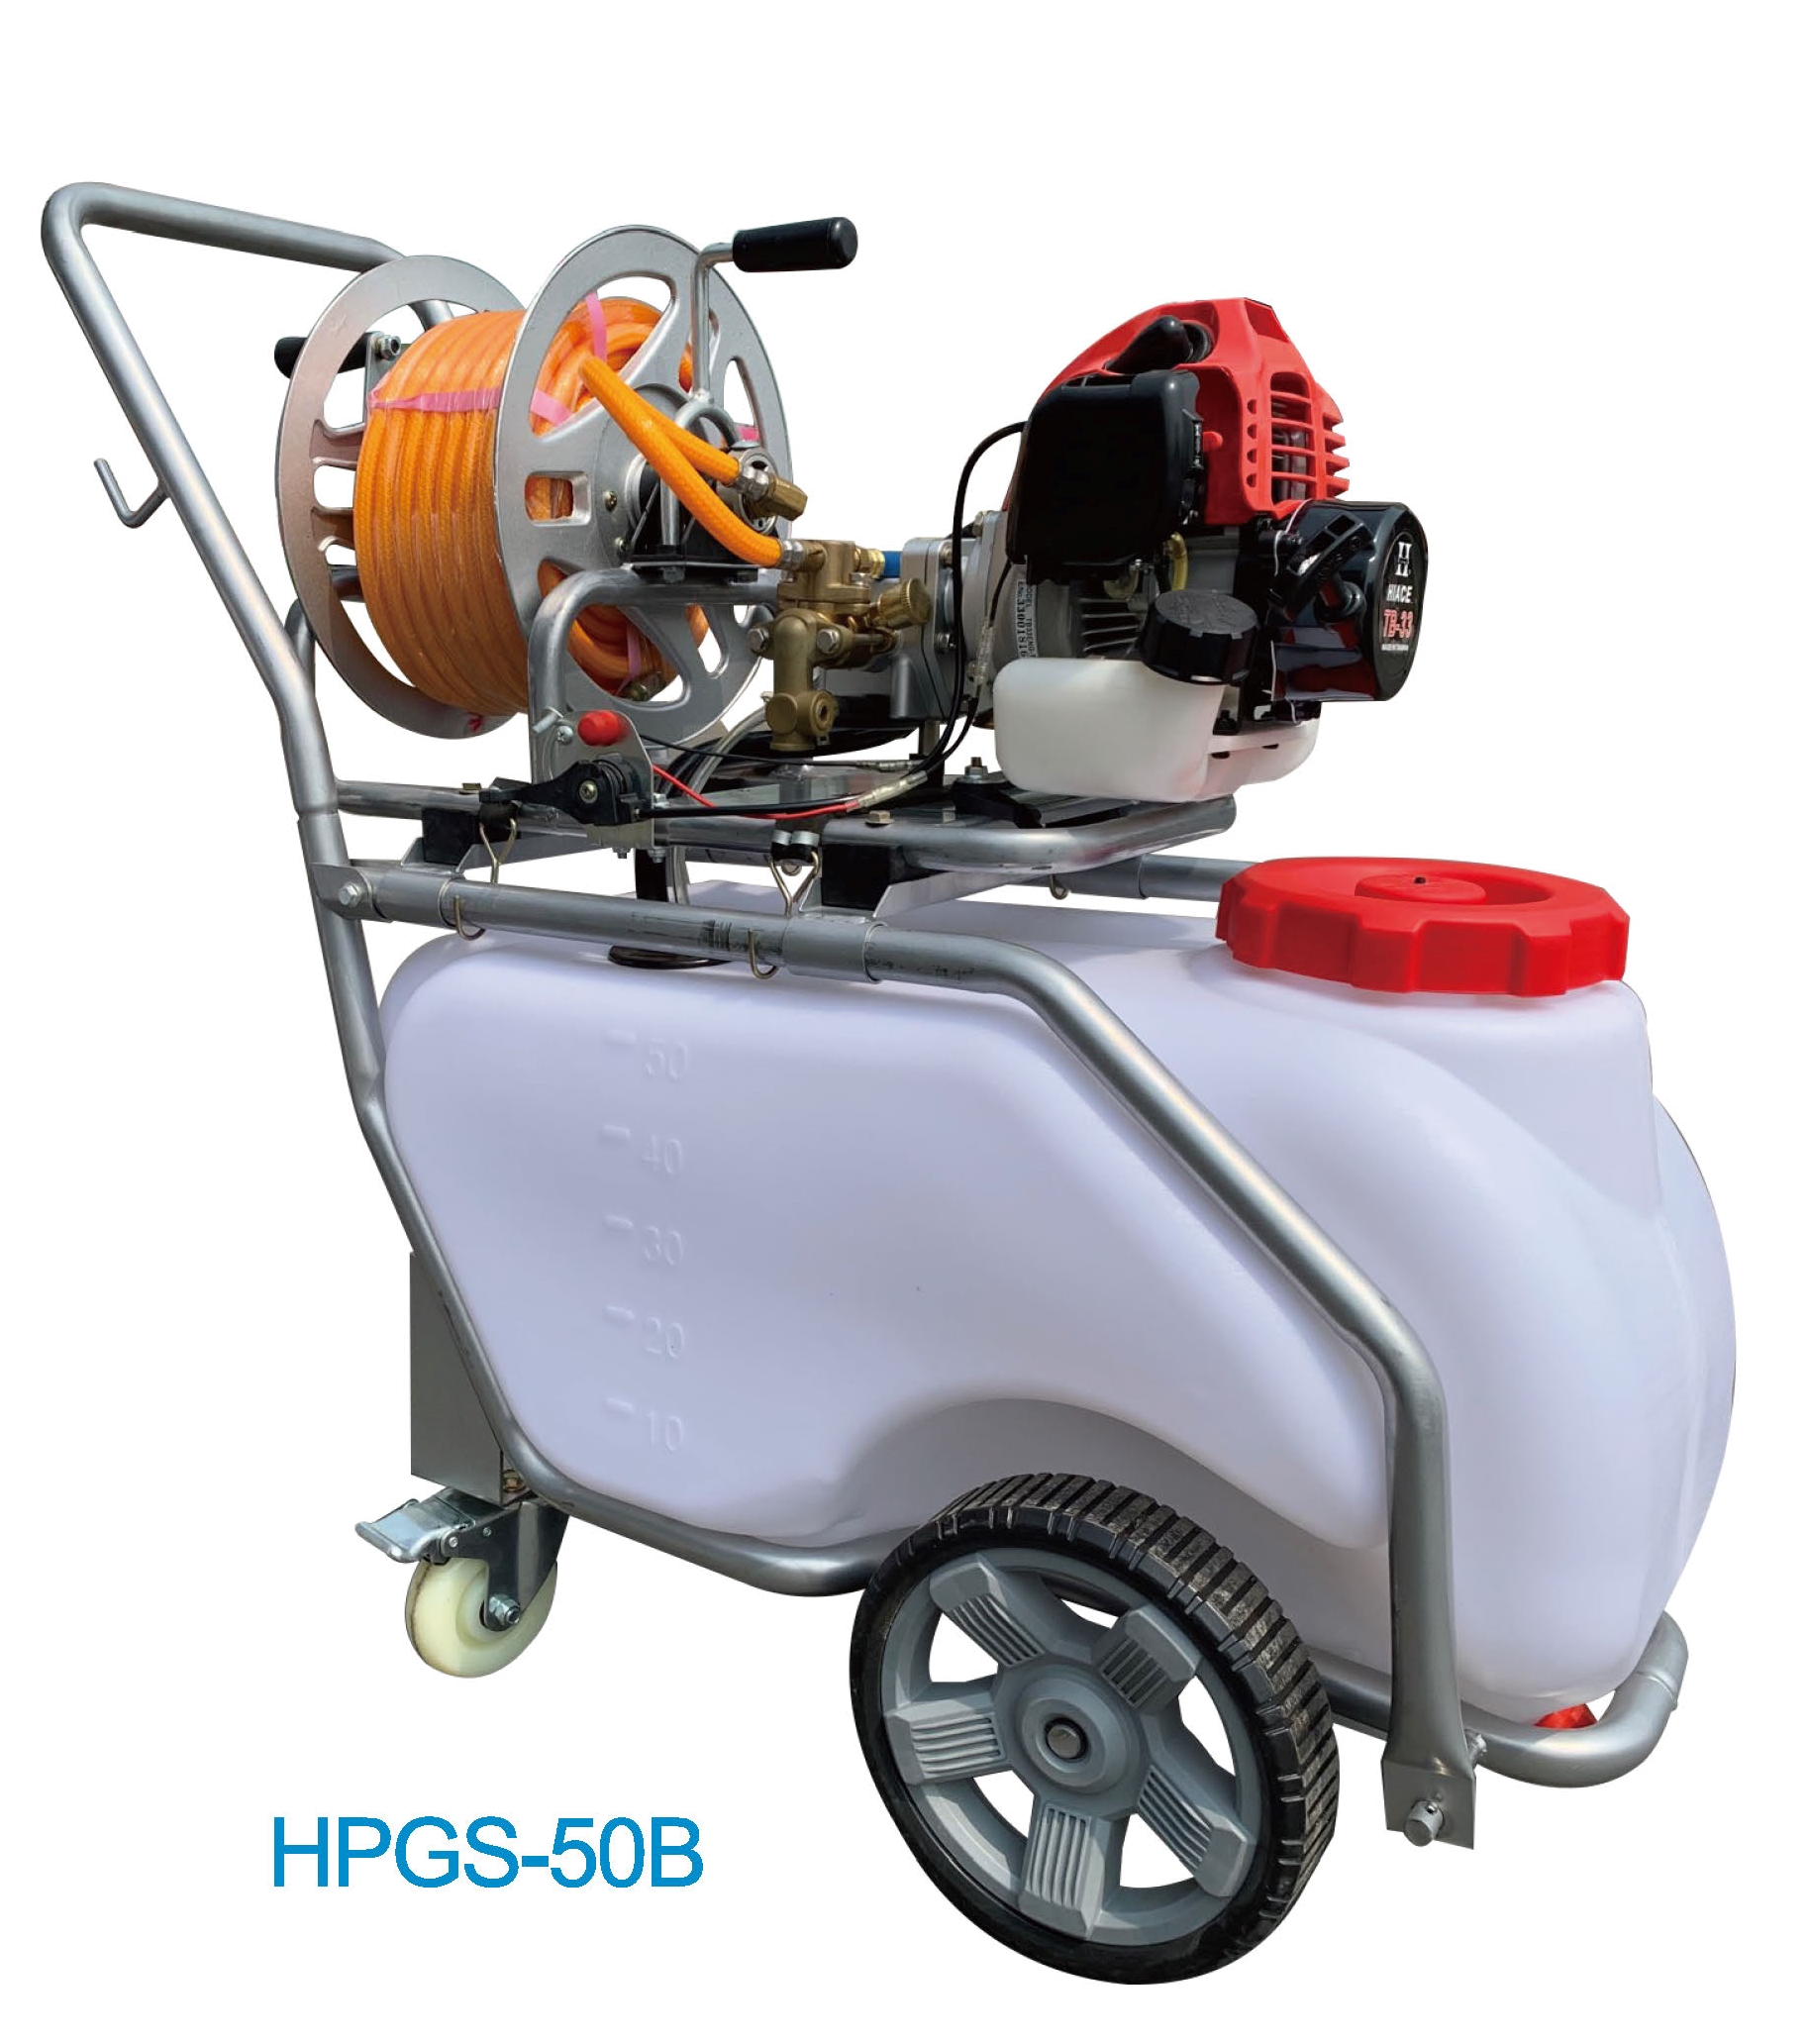 HPGS-50B Hand Push Engine Sprayer